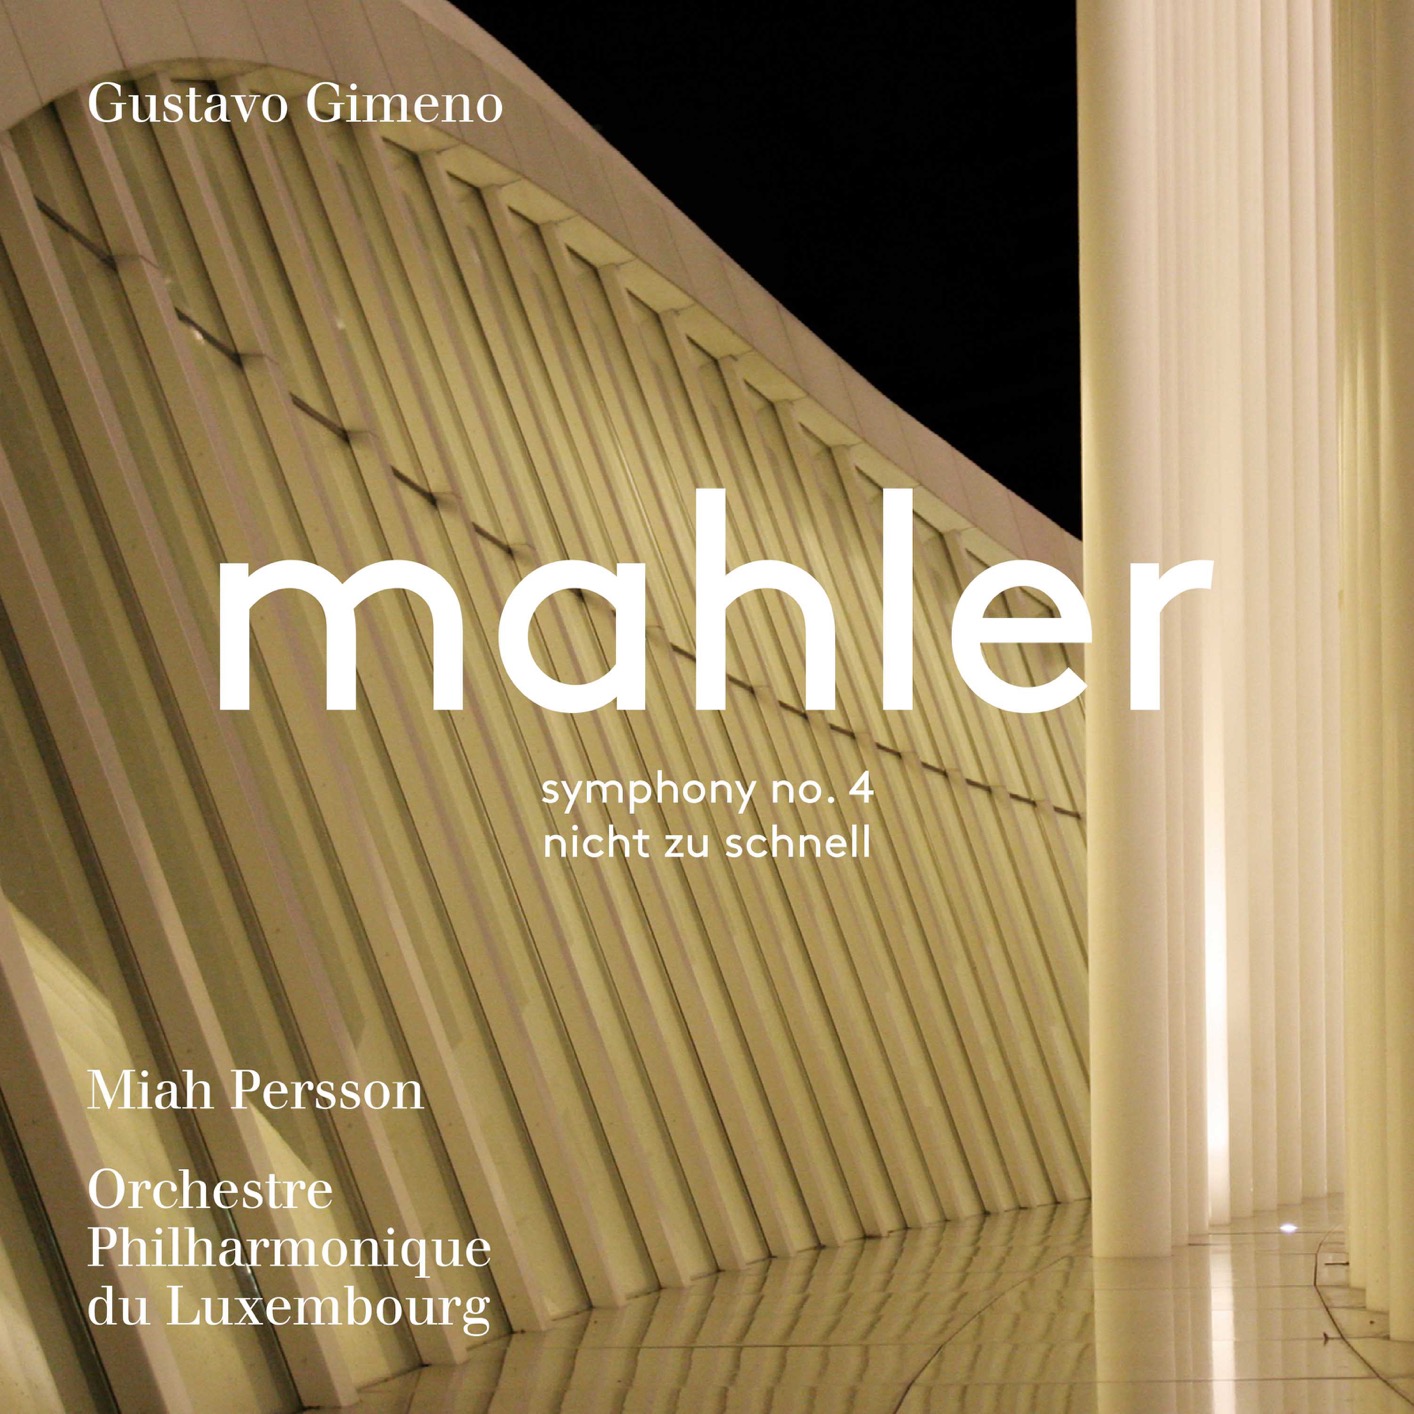 Gustavo Gimeno – Mahler: Symphony No. 4 in G Major & Piano Quartet in A Minor (2018) [FLAC 24bit/96kHz]